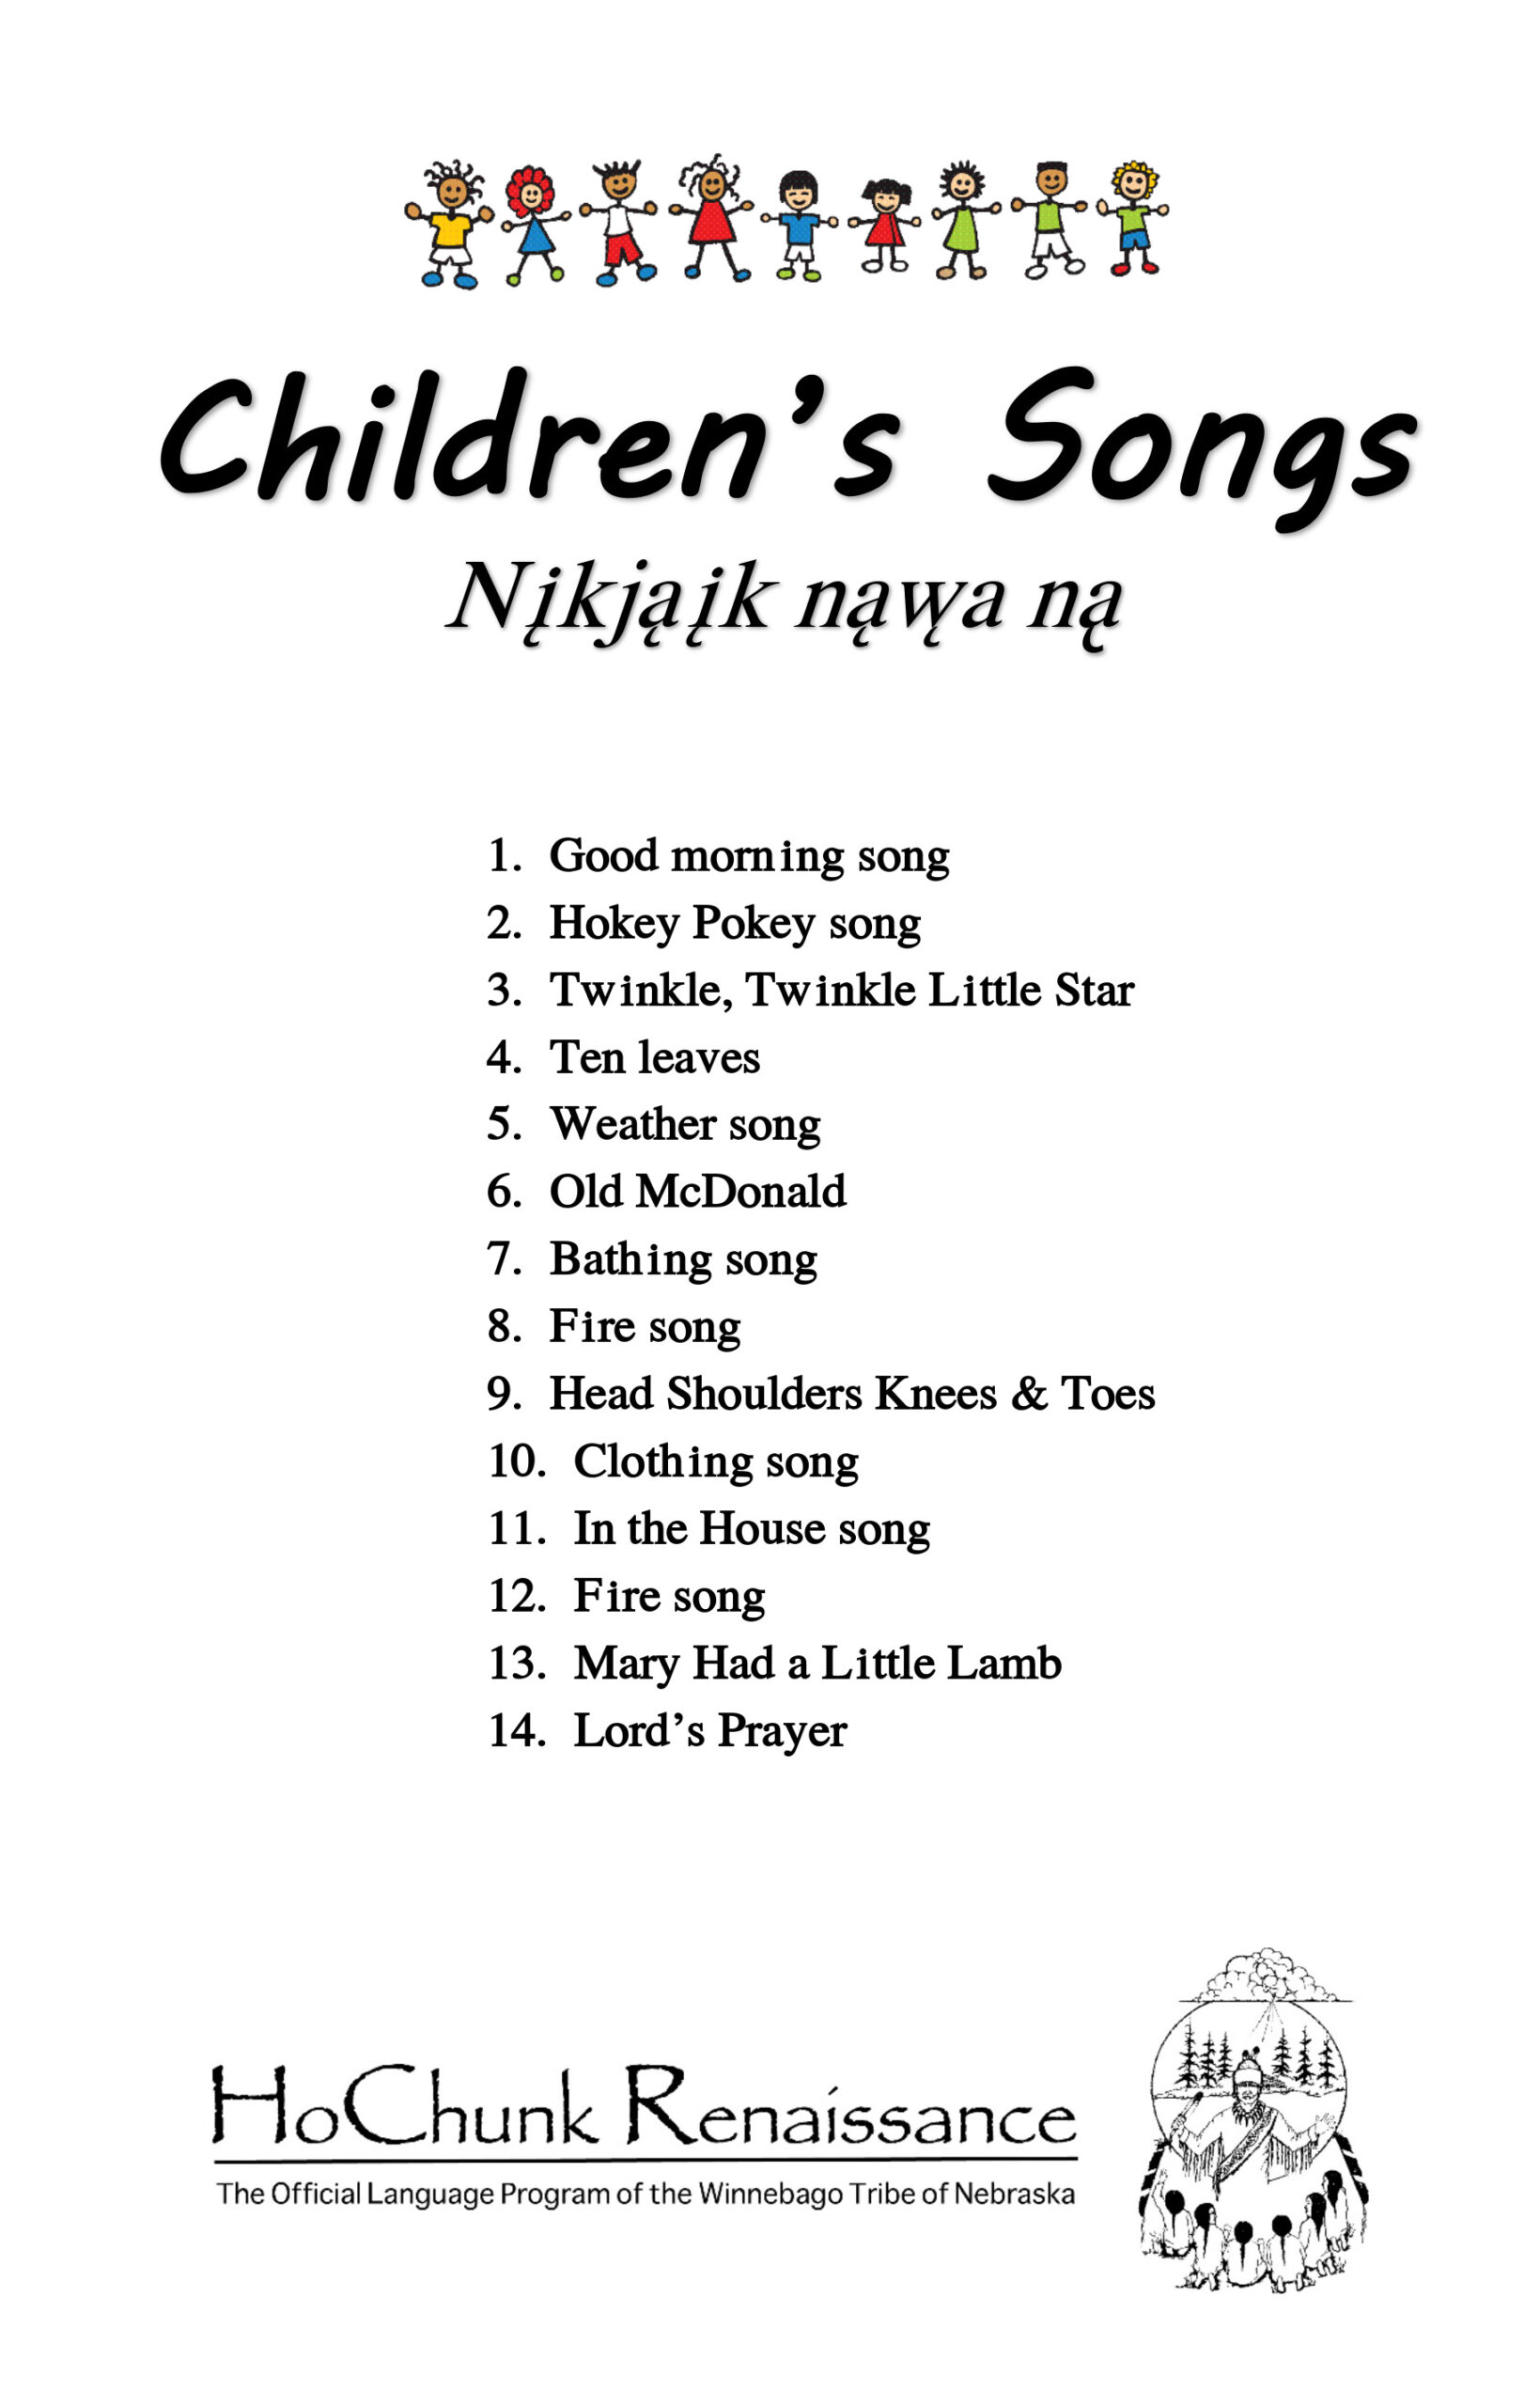 Children's Song Lyrics - HoChunk Renaissance